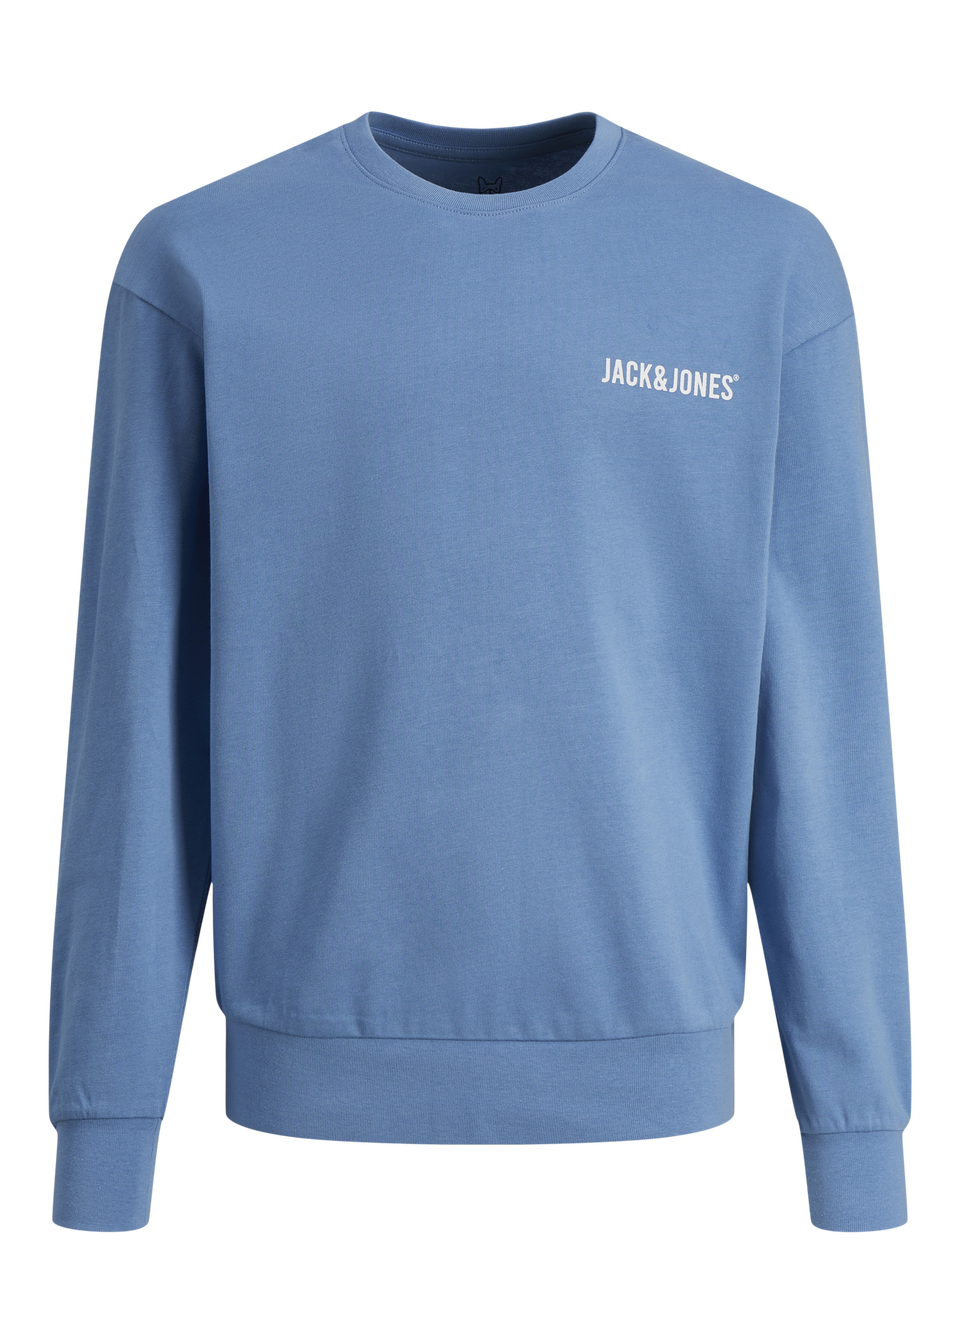 Jack & Jones Blue Essentials Crew Neck Sweatshirt (6-16yrs)